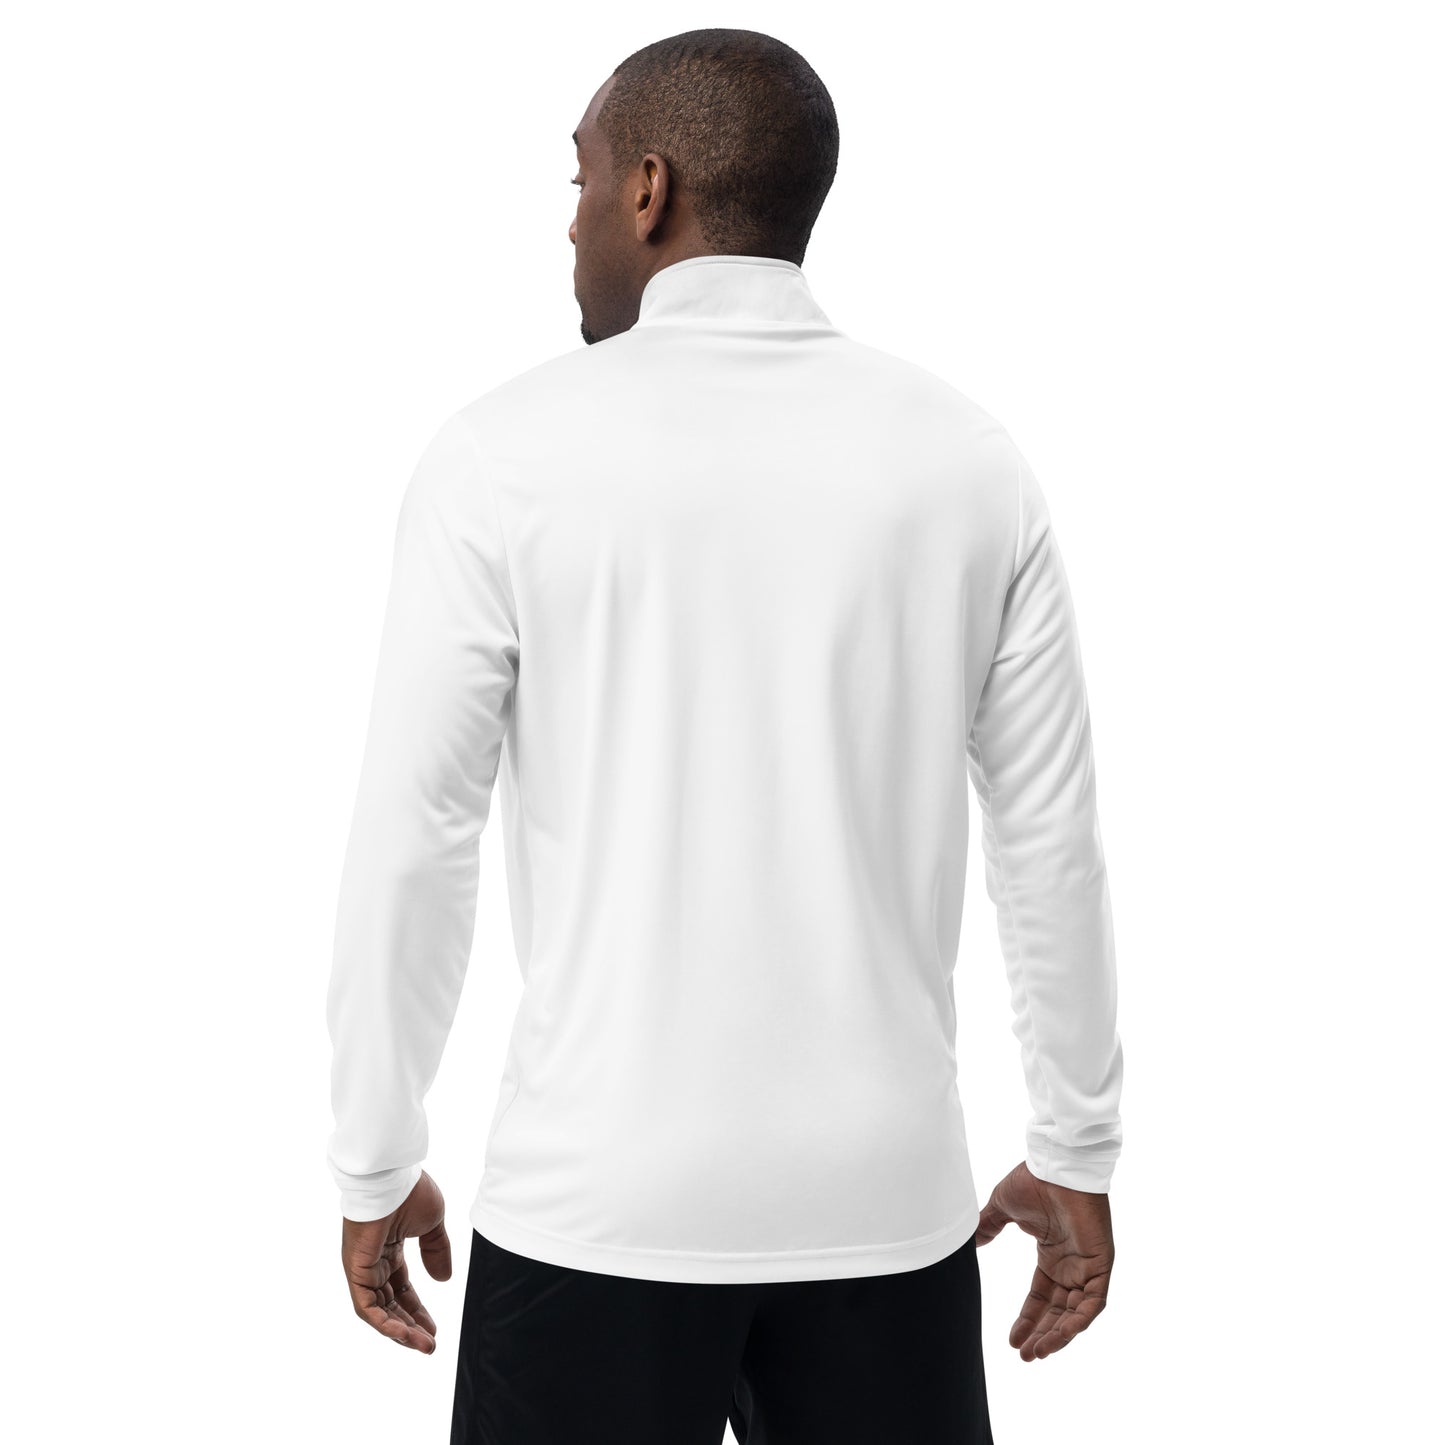 IDSA Basics - Adidas Quarter zip pullover